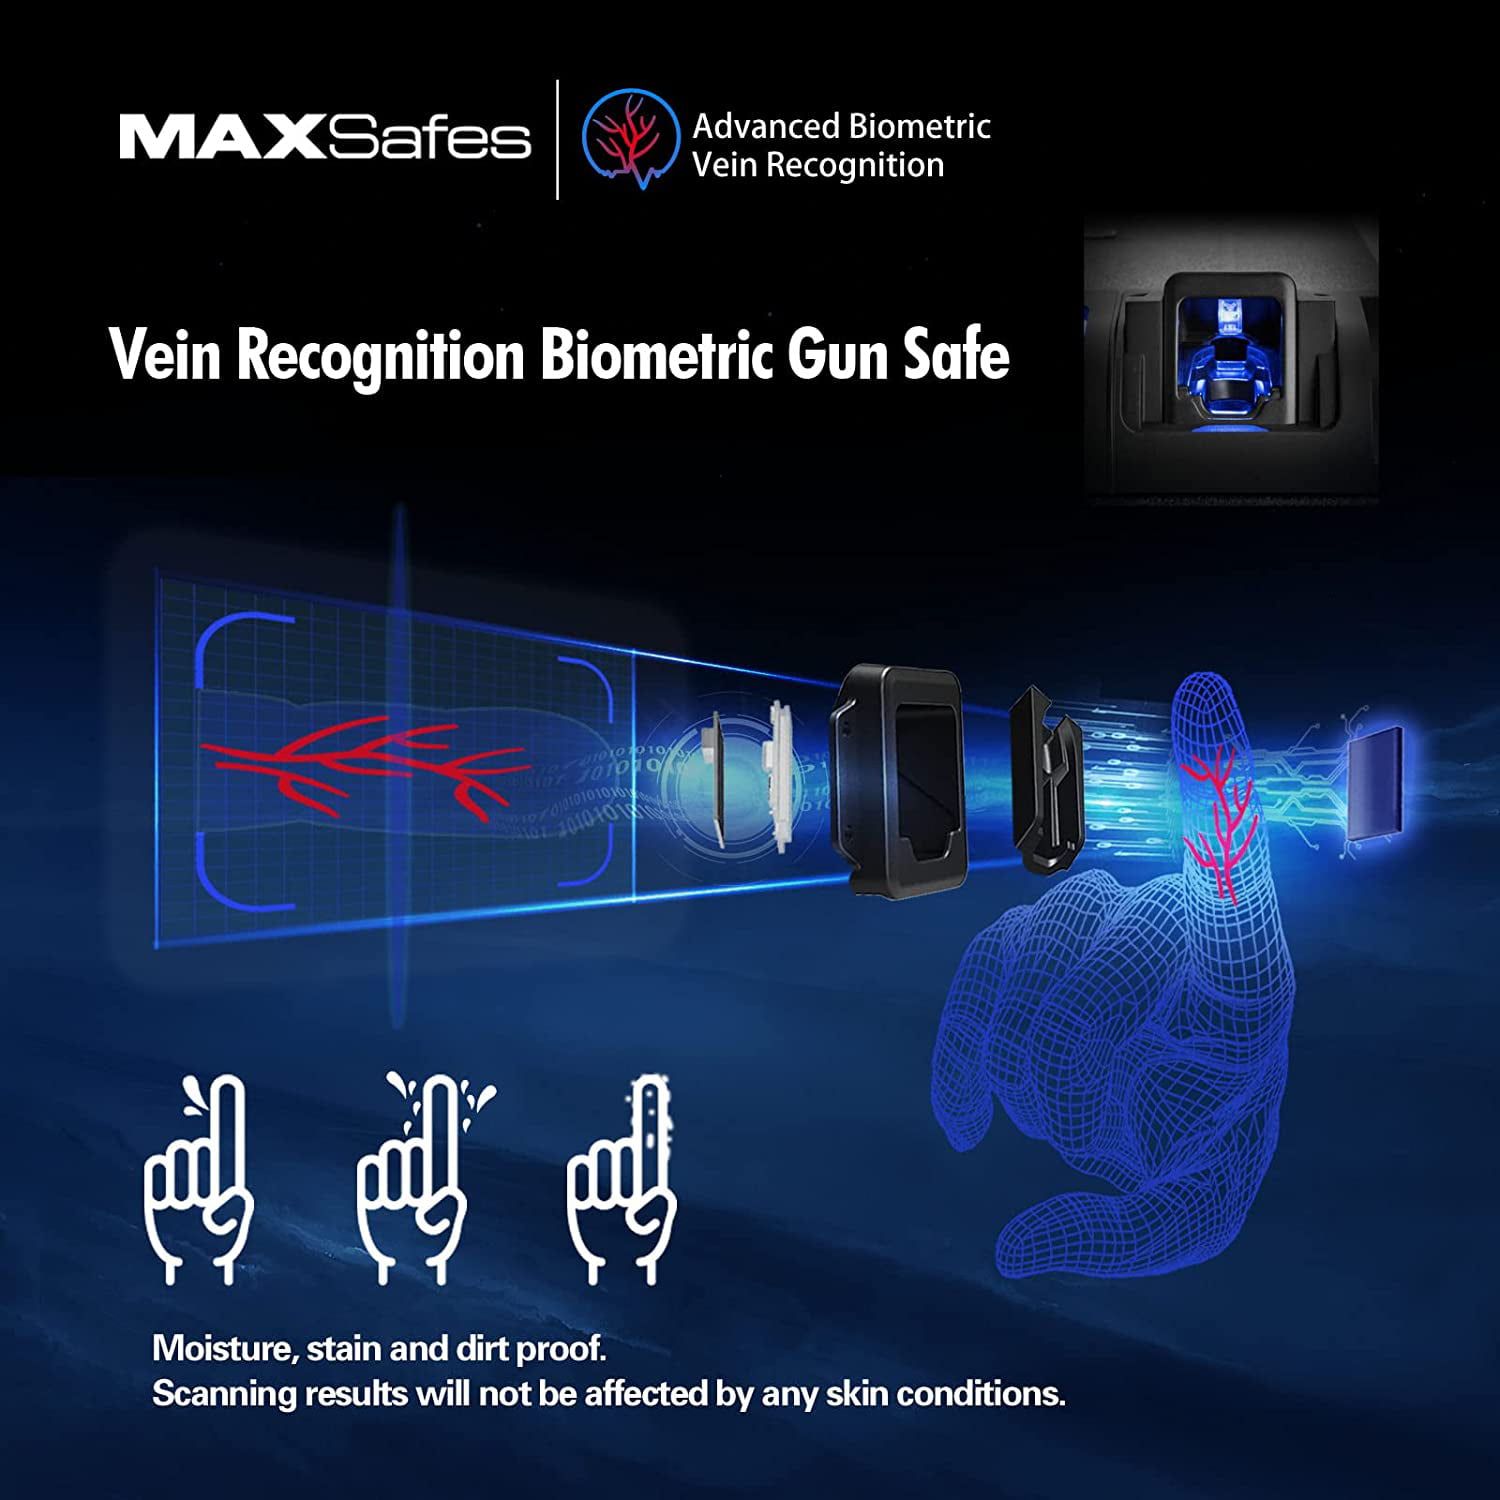 Two MAXSafes Handgun Gun High Capacity Super Safe, & Recognition Fingerprint with Pistol Biometric Vault Safe for Vein Lock, Quick-Access Finger Home Car